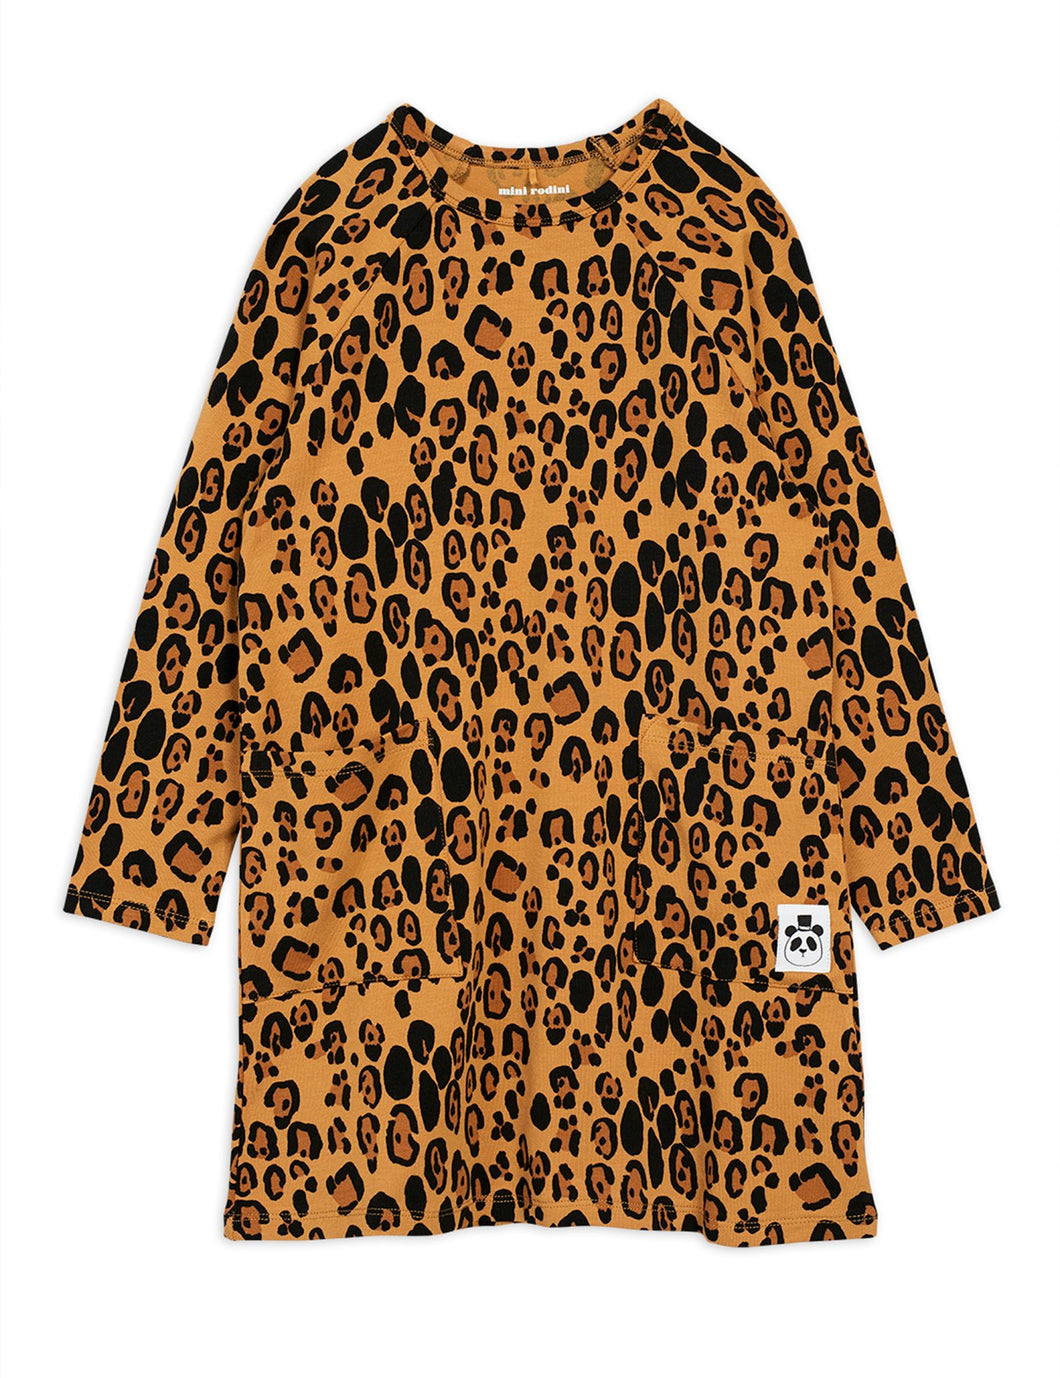 Mini Rodini Basic Leopard Longsleeve Dress